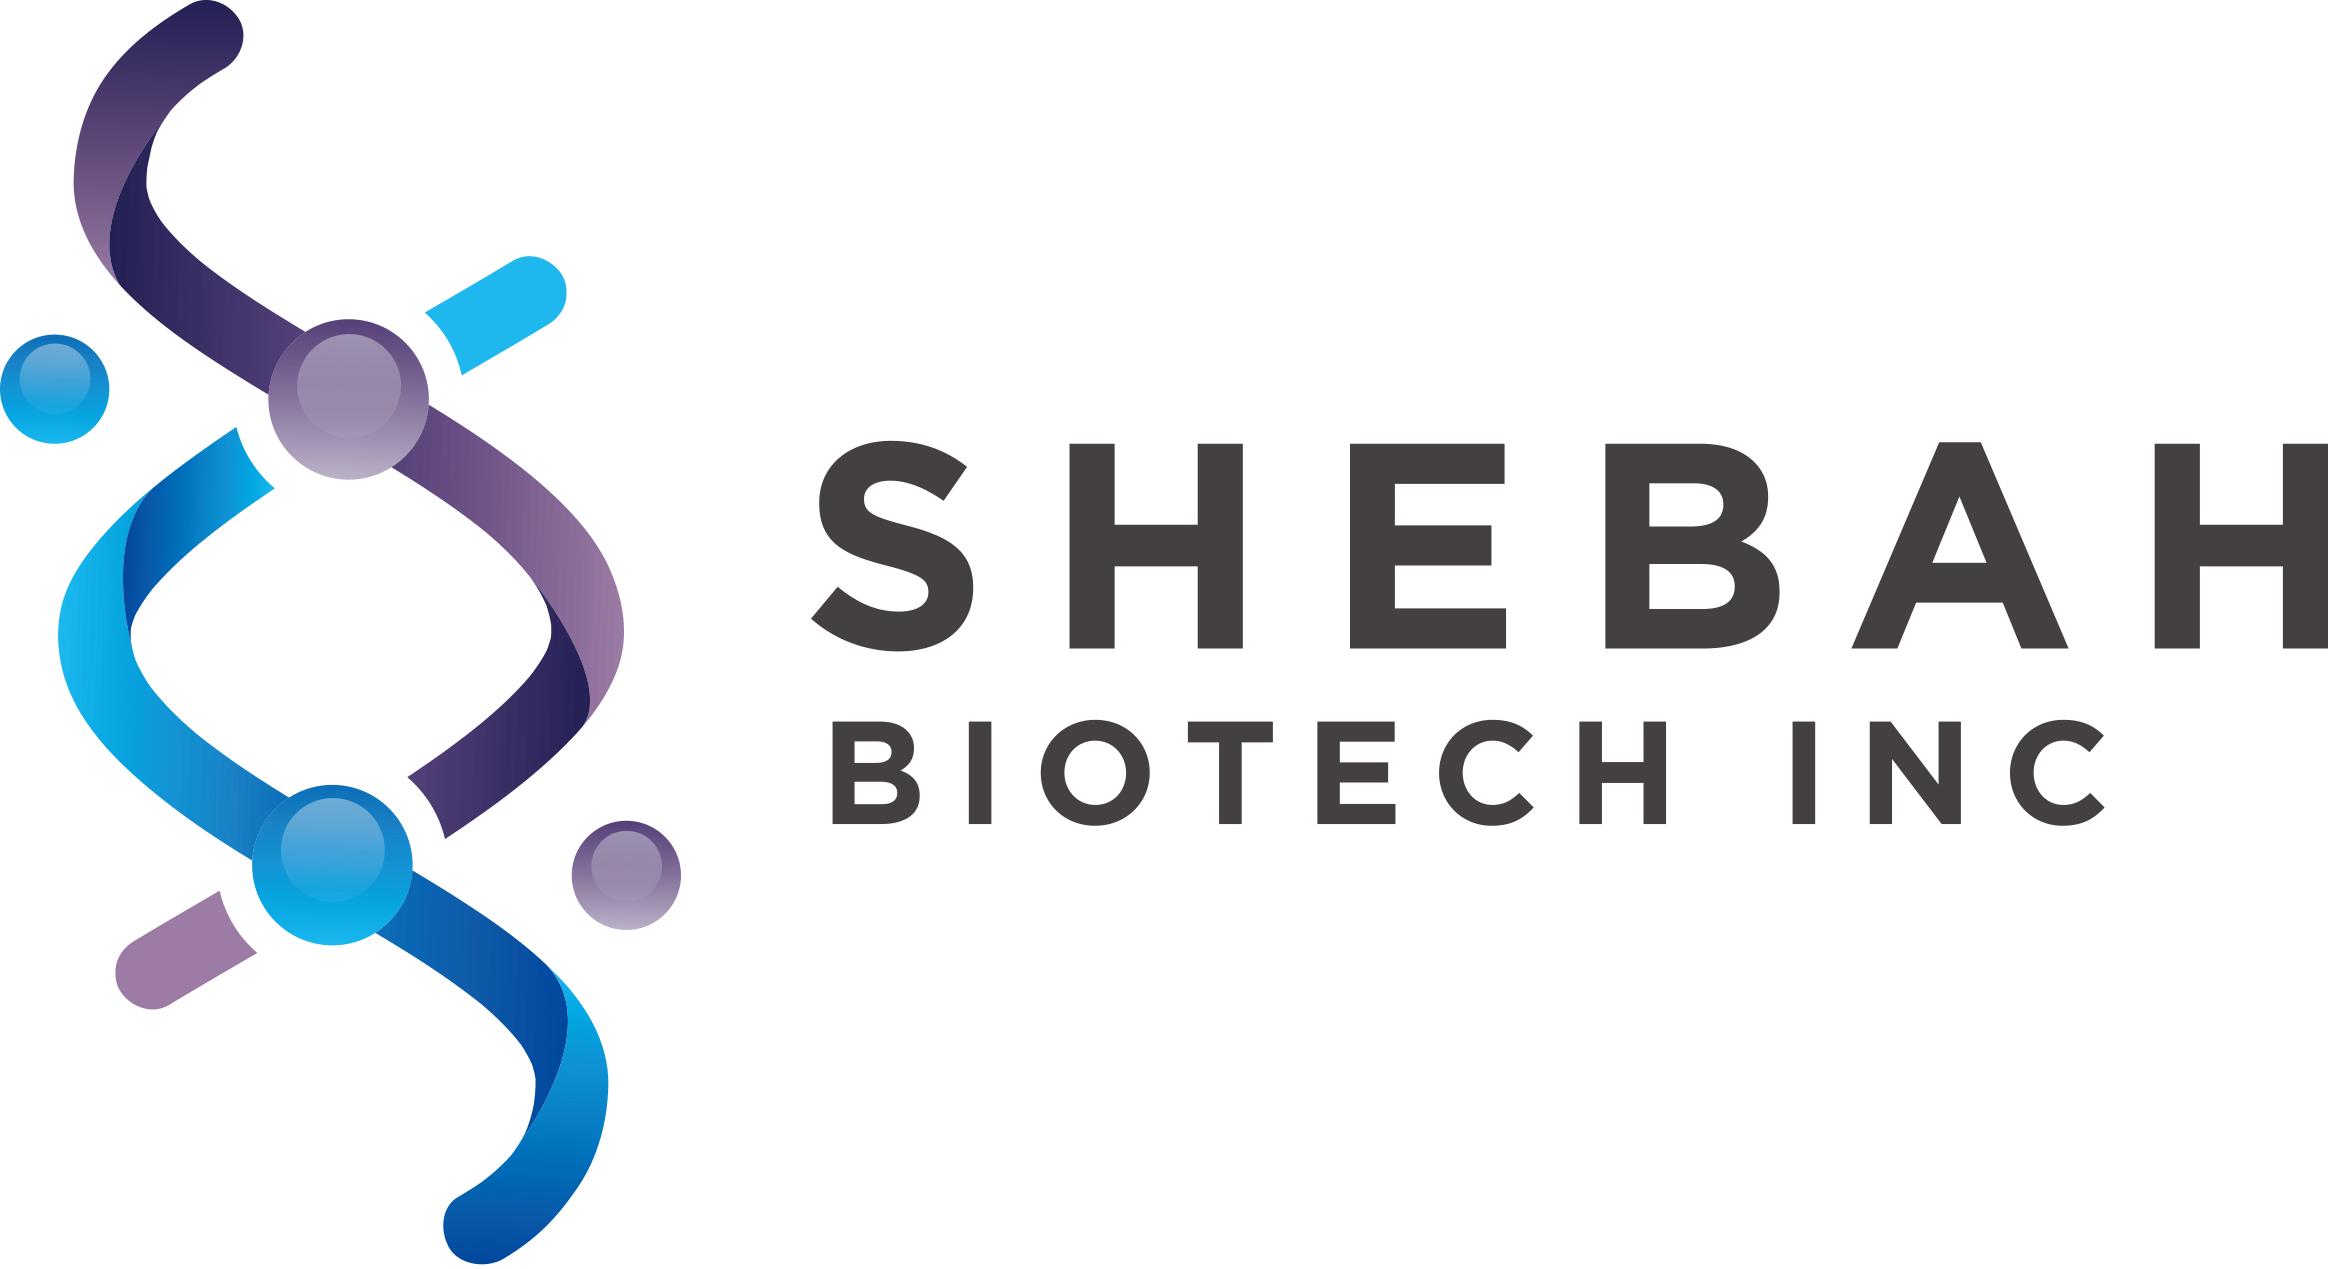 Shebah Biotech Inc